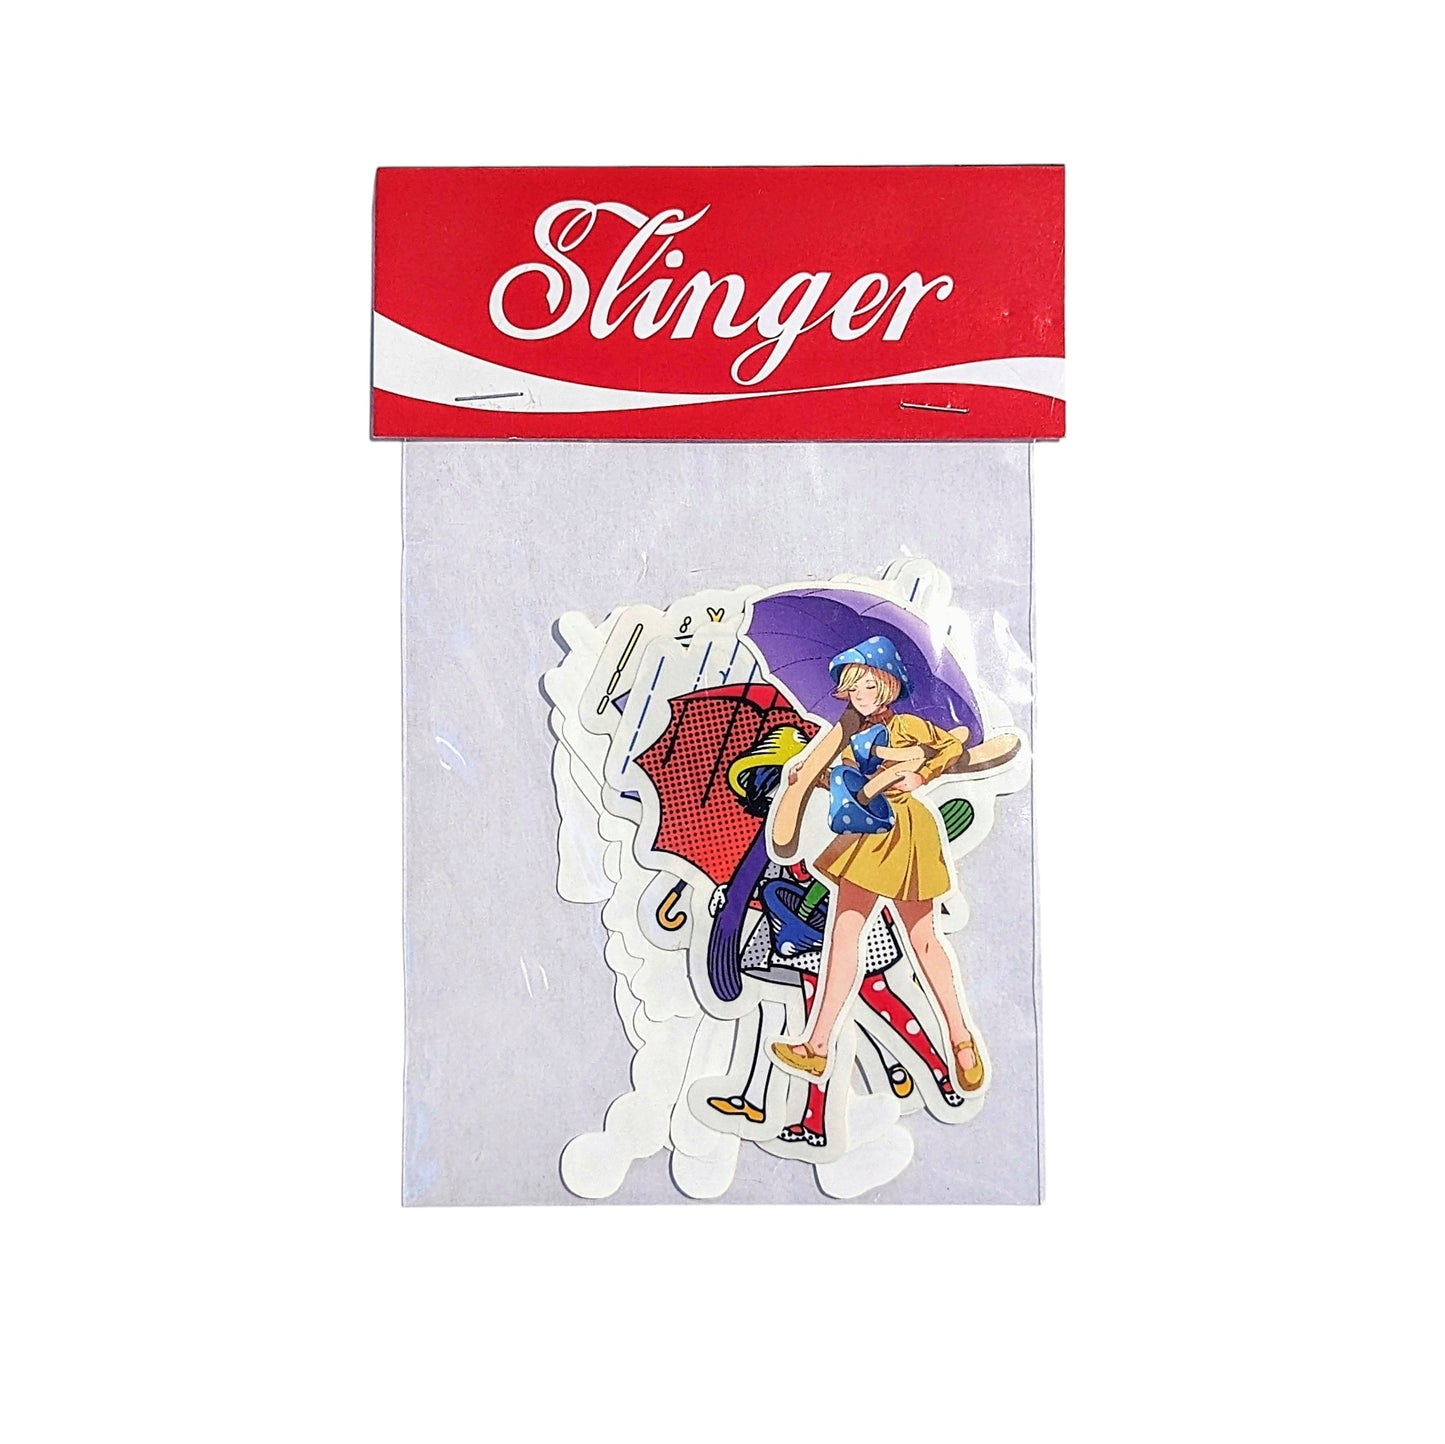 Slinger Sticker Pack  Includes (6) 4” vinyl die cut stickers with clear outline Featuring Lot Guru, Terp Girl (x2), Rosin Girl, Neon Mushroom Girl & Anime Girl